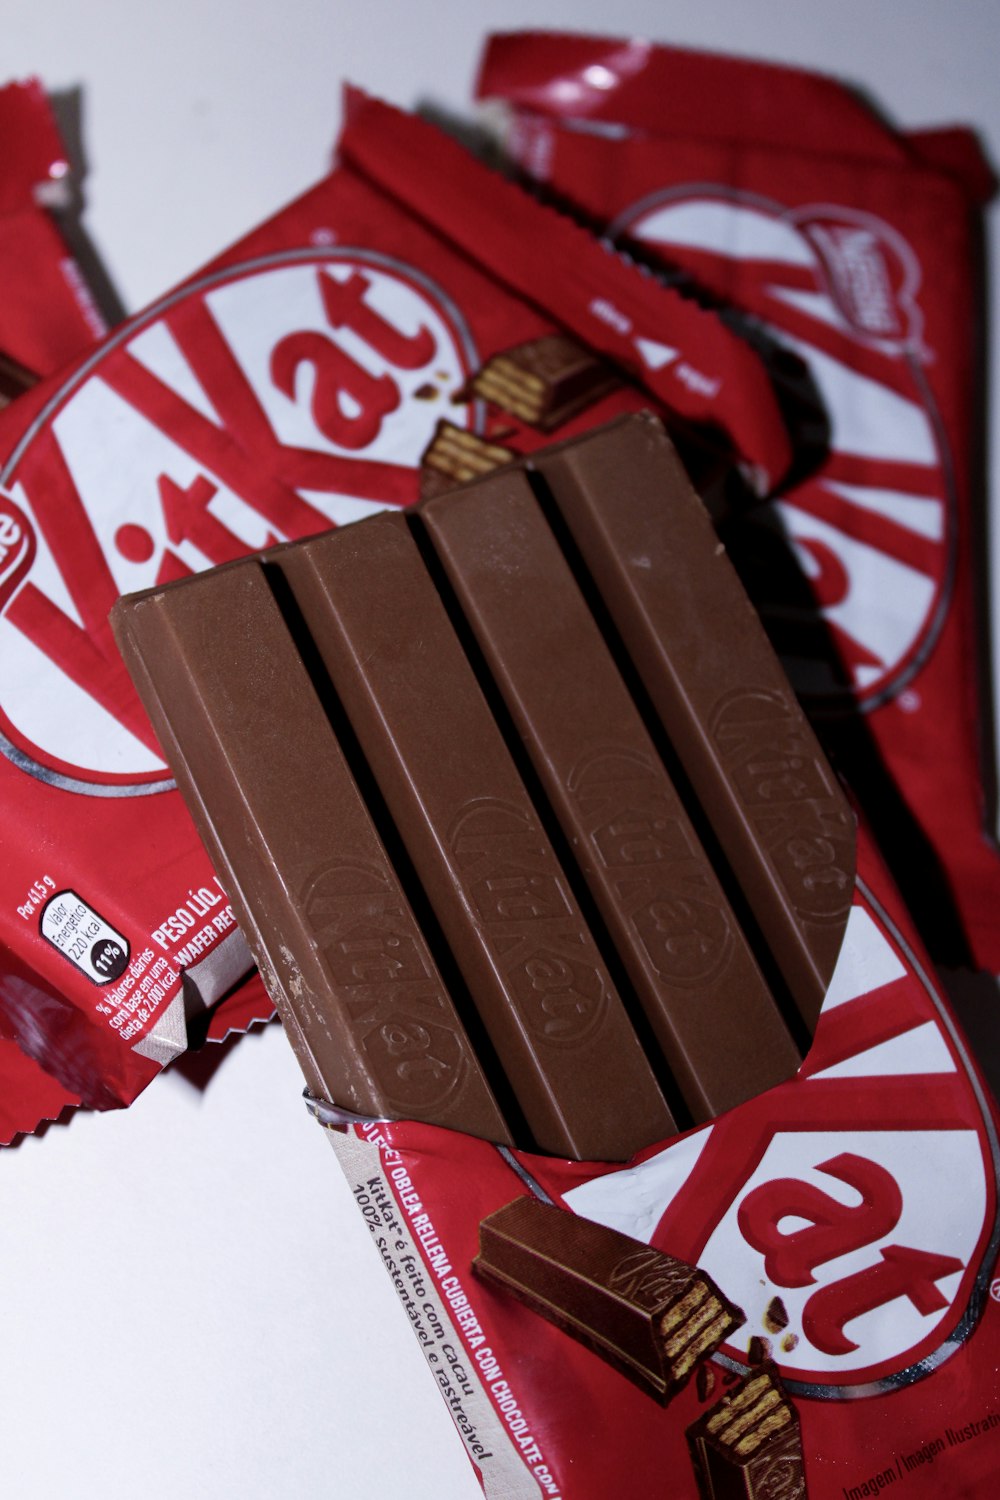 Kitkat chocolate bar